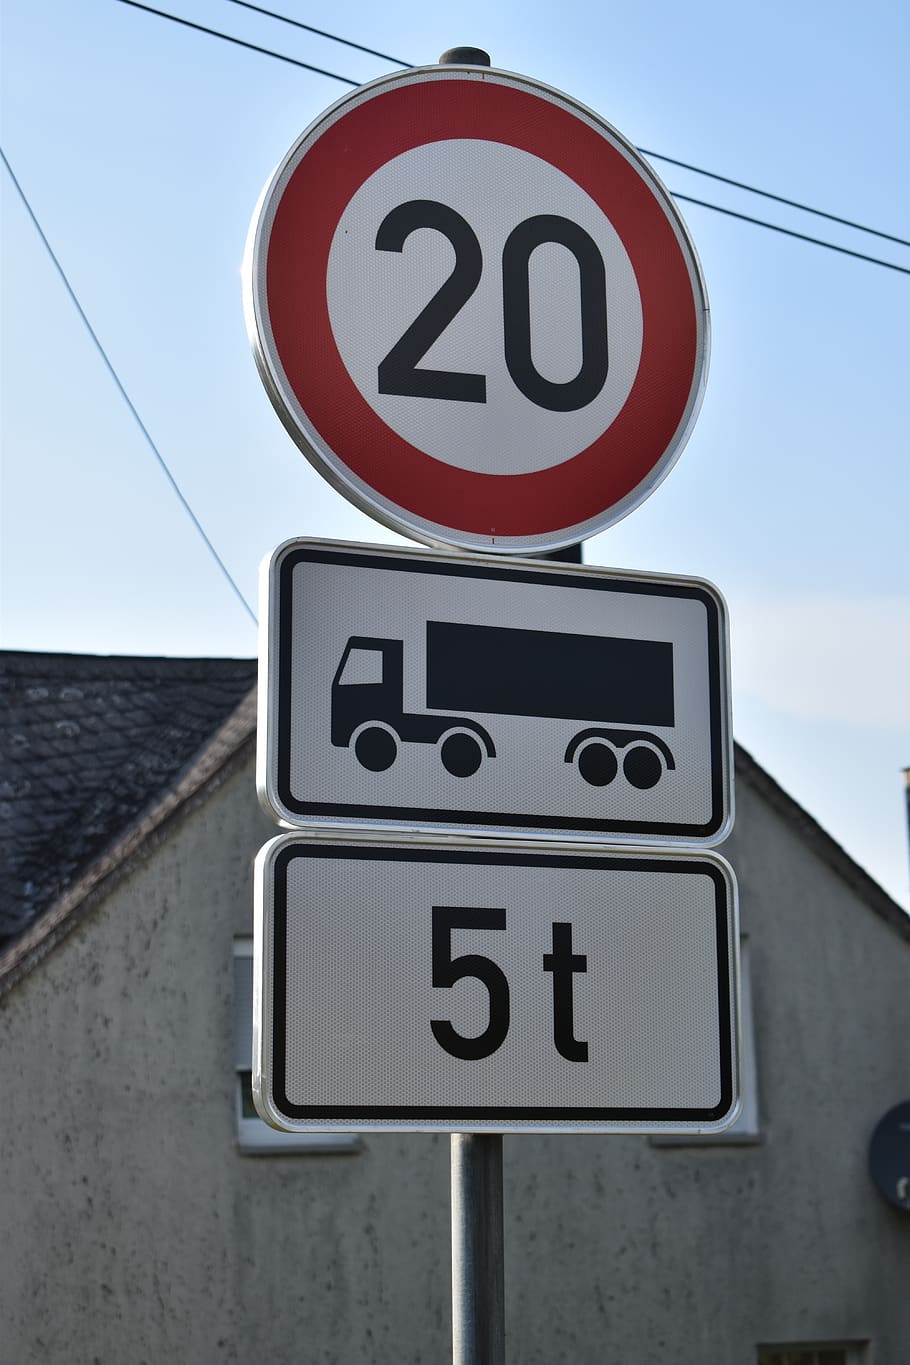 shield, twenty kmh, truck, tons of traffic, traffic sign, street sign, road sign, speed limitation, vehicles, speed